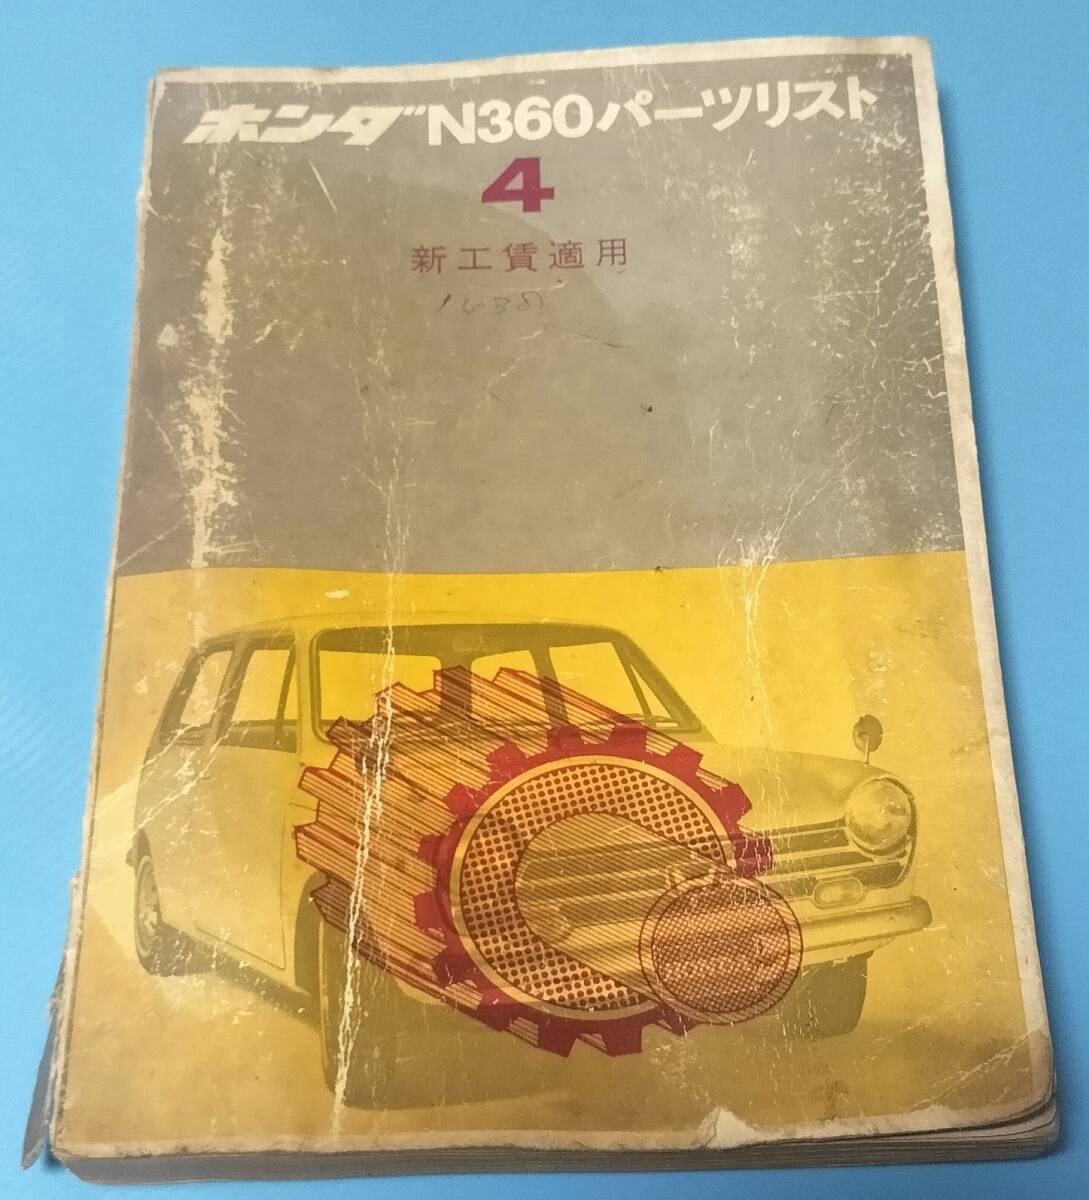  Honda N360 4 версия список запасных частей Showa 44 год 2 месяц выпуск каталог запчастей 